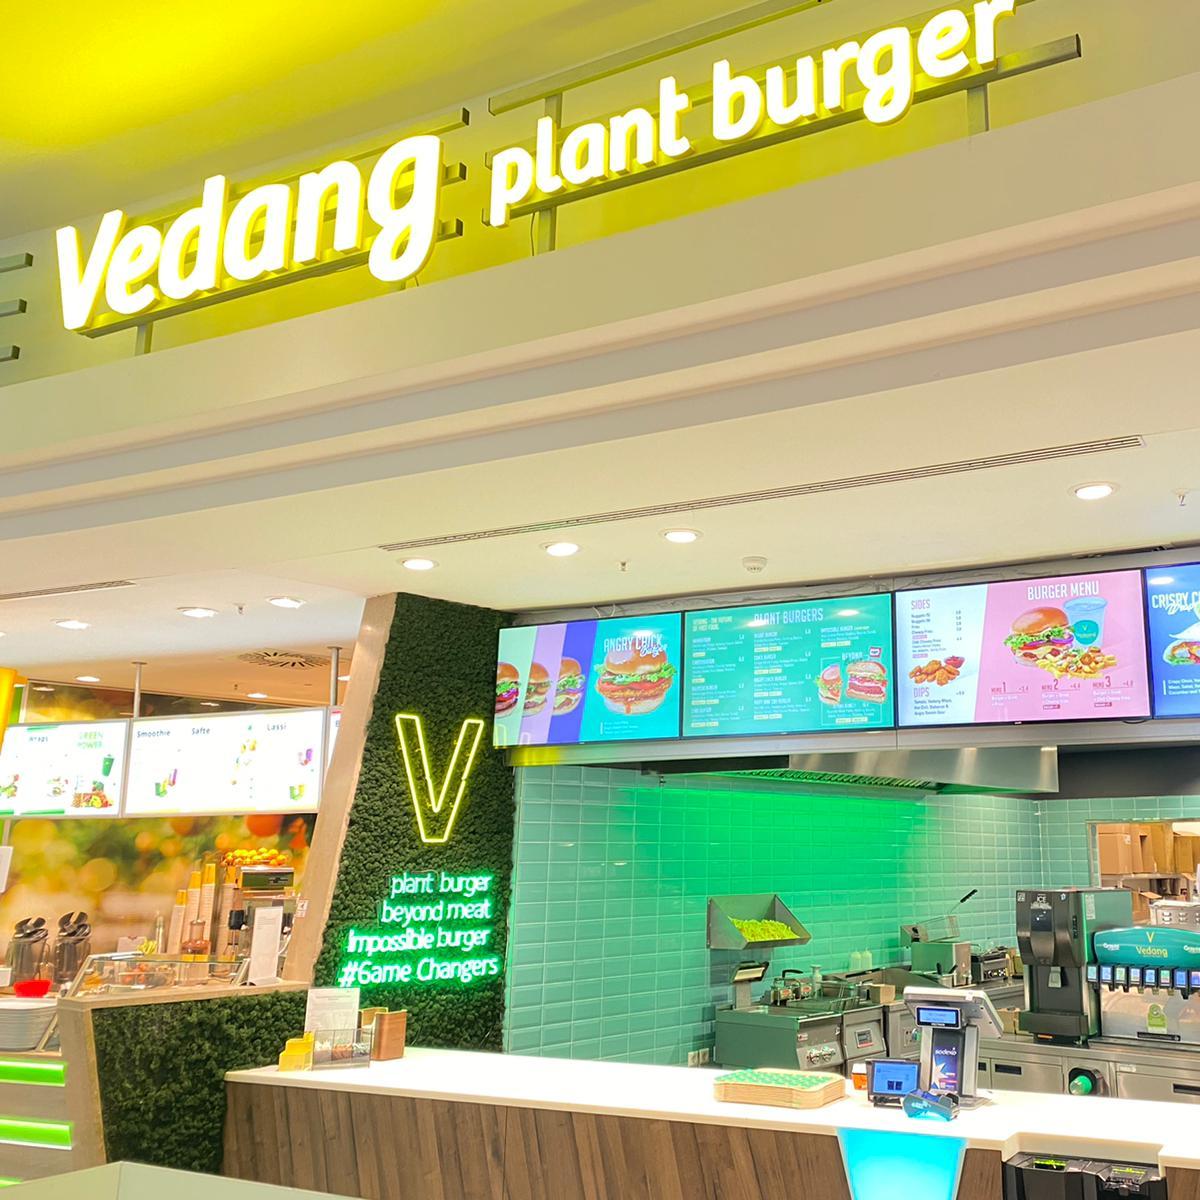 Restaurant "Vedang - plant burger (Alexa)" in Berlin